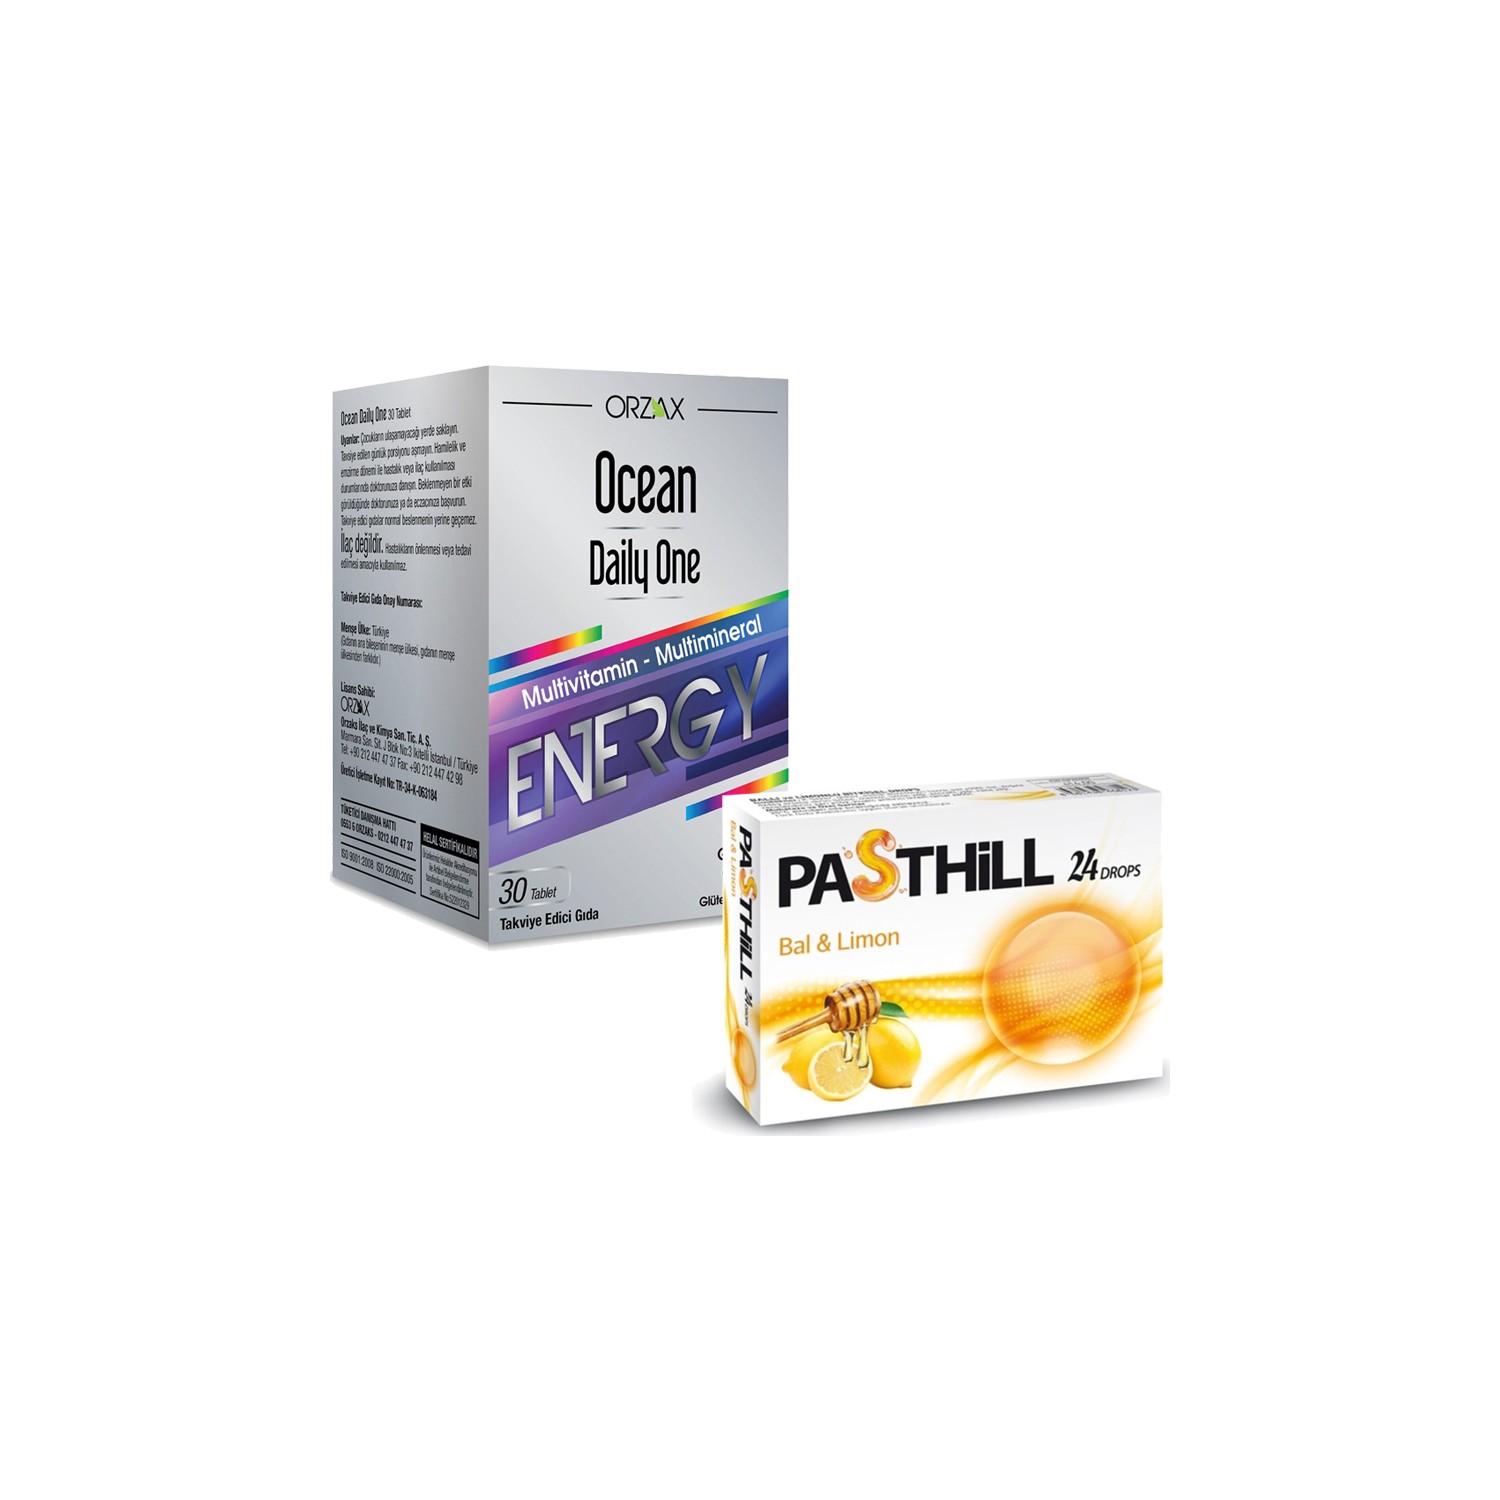 Пищевая добавка Orzax Ocean Daily One Energy, 30 таблеток + Пастилки Pasthill Orange & Vitamin C фото